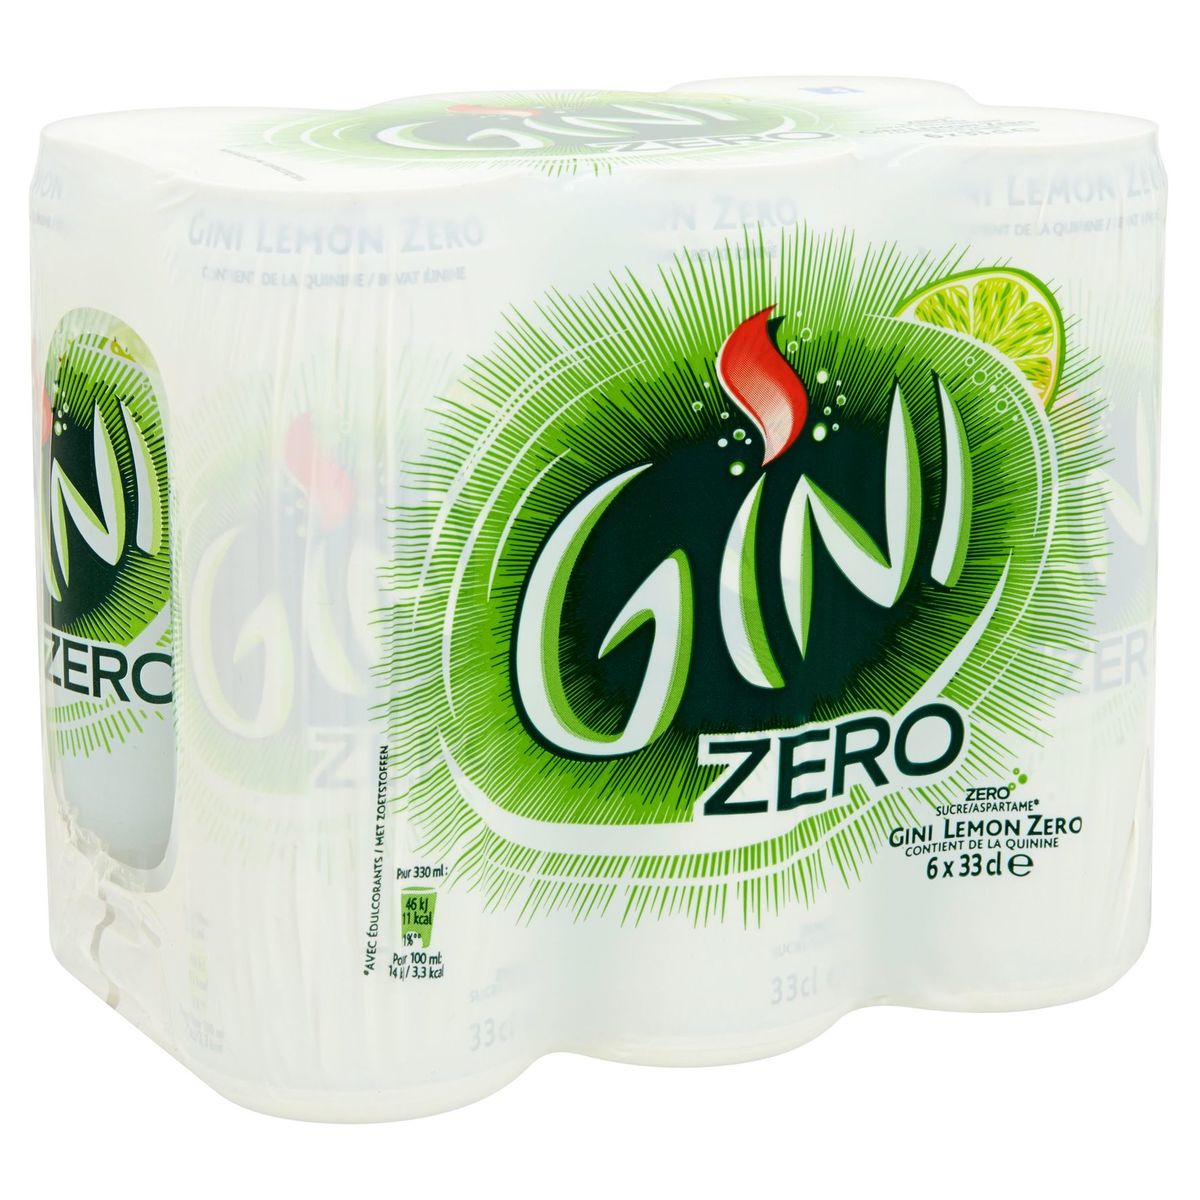 Gini Lemon Zero 6 x 33 cl